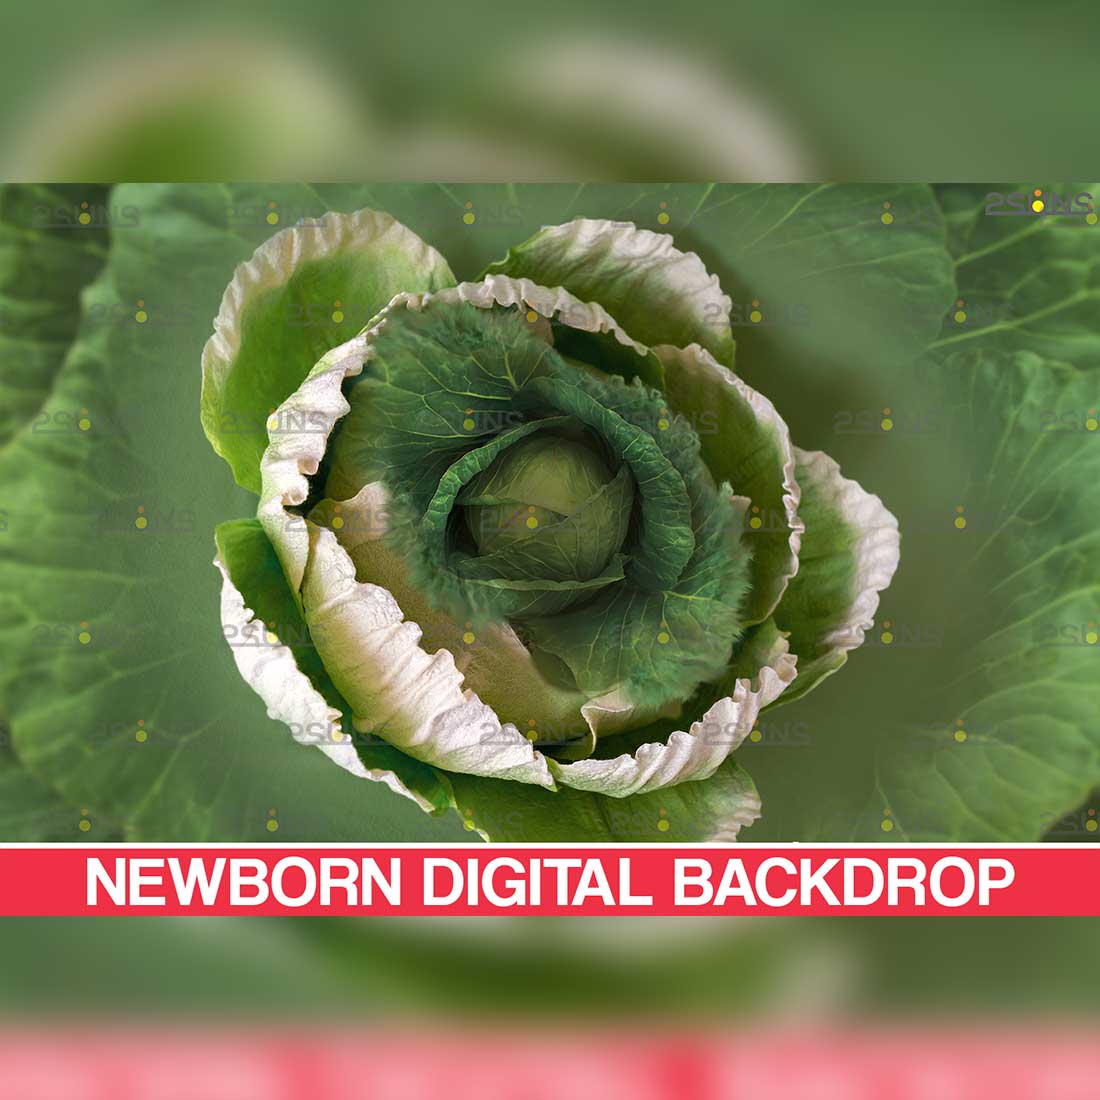 Newborn Nature Digital Backdrops Preview Image.